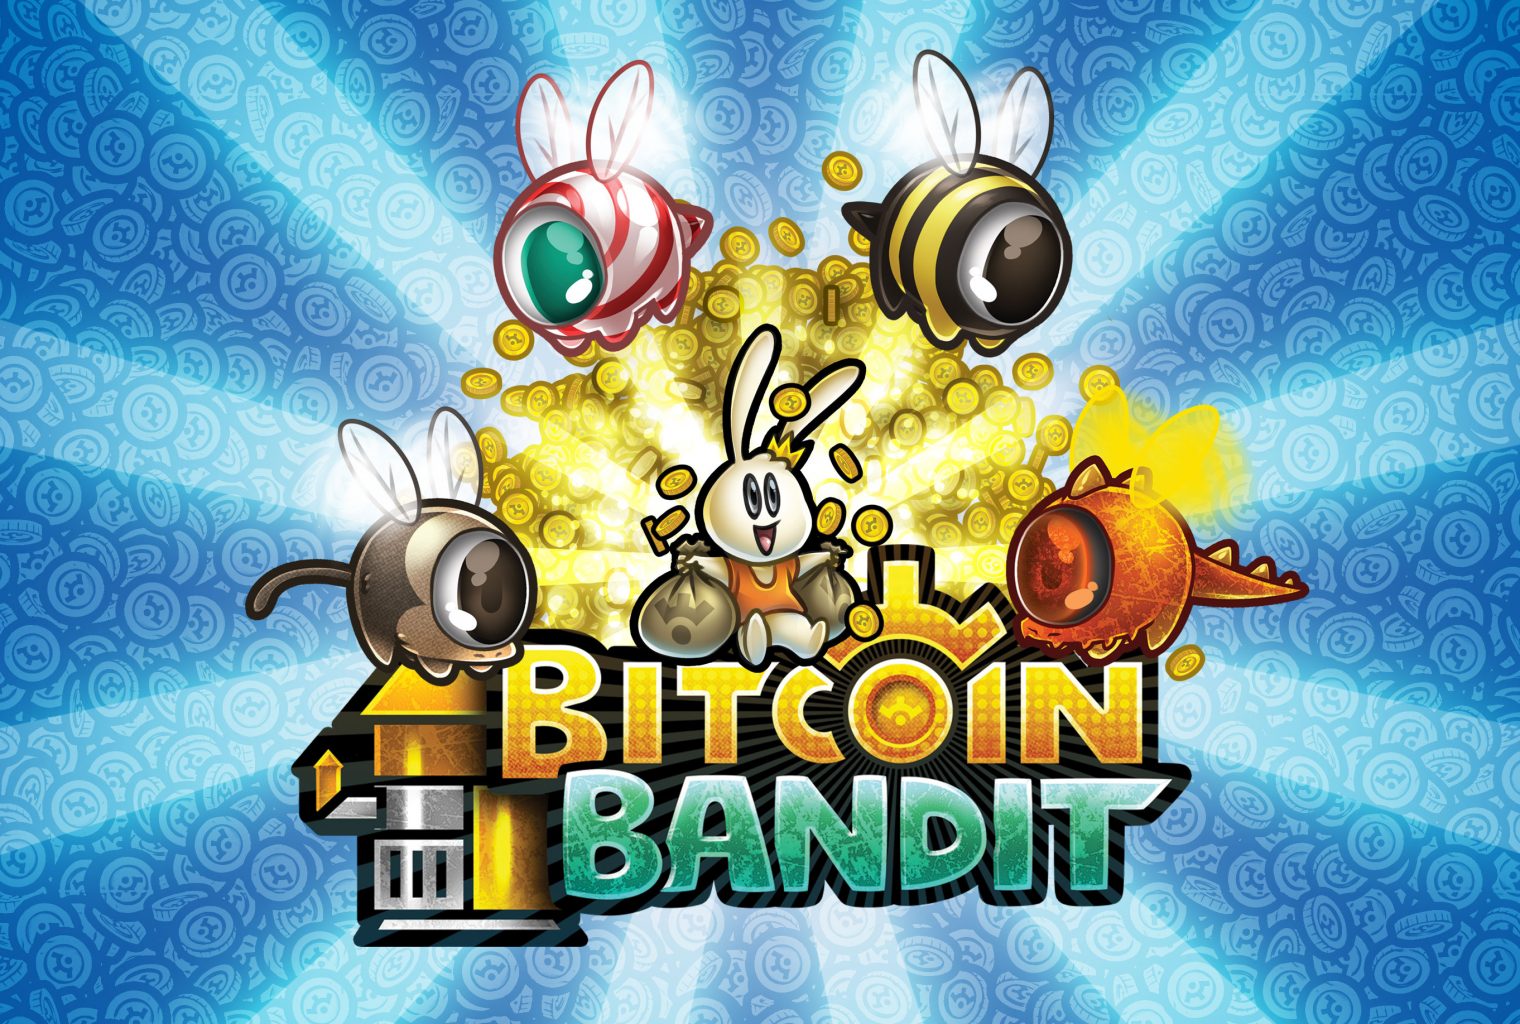 How to earn bitcoins through games